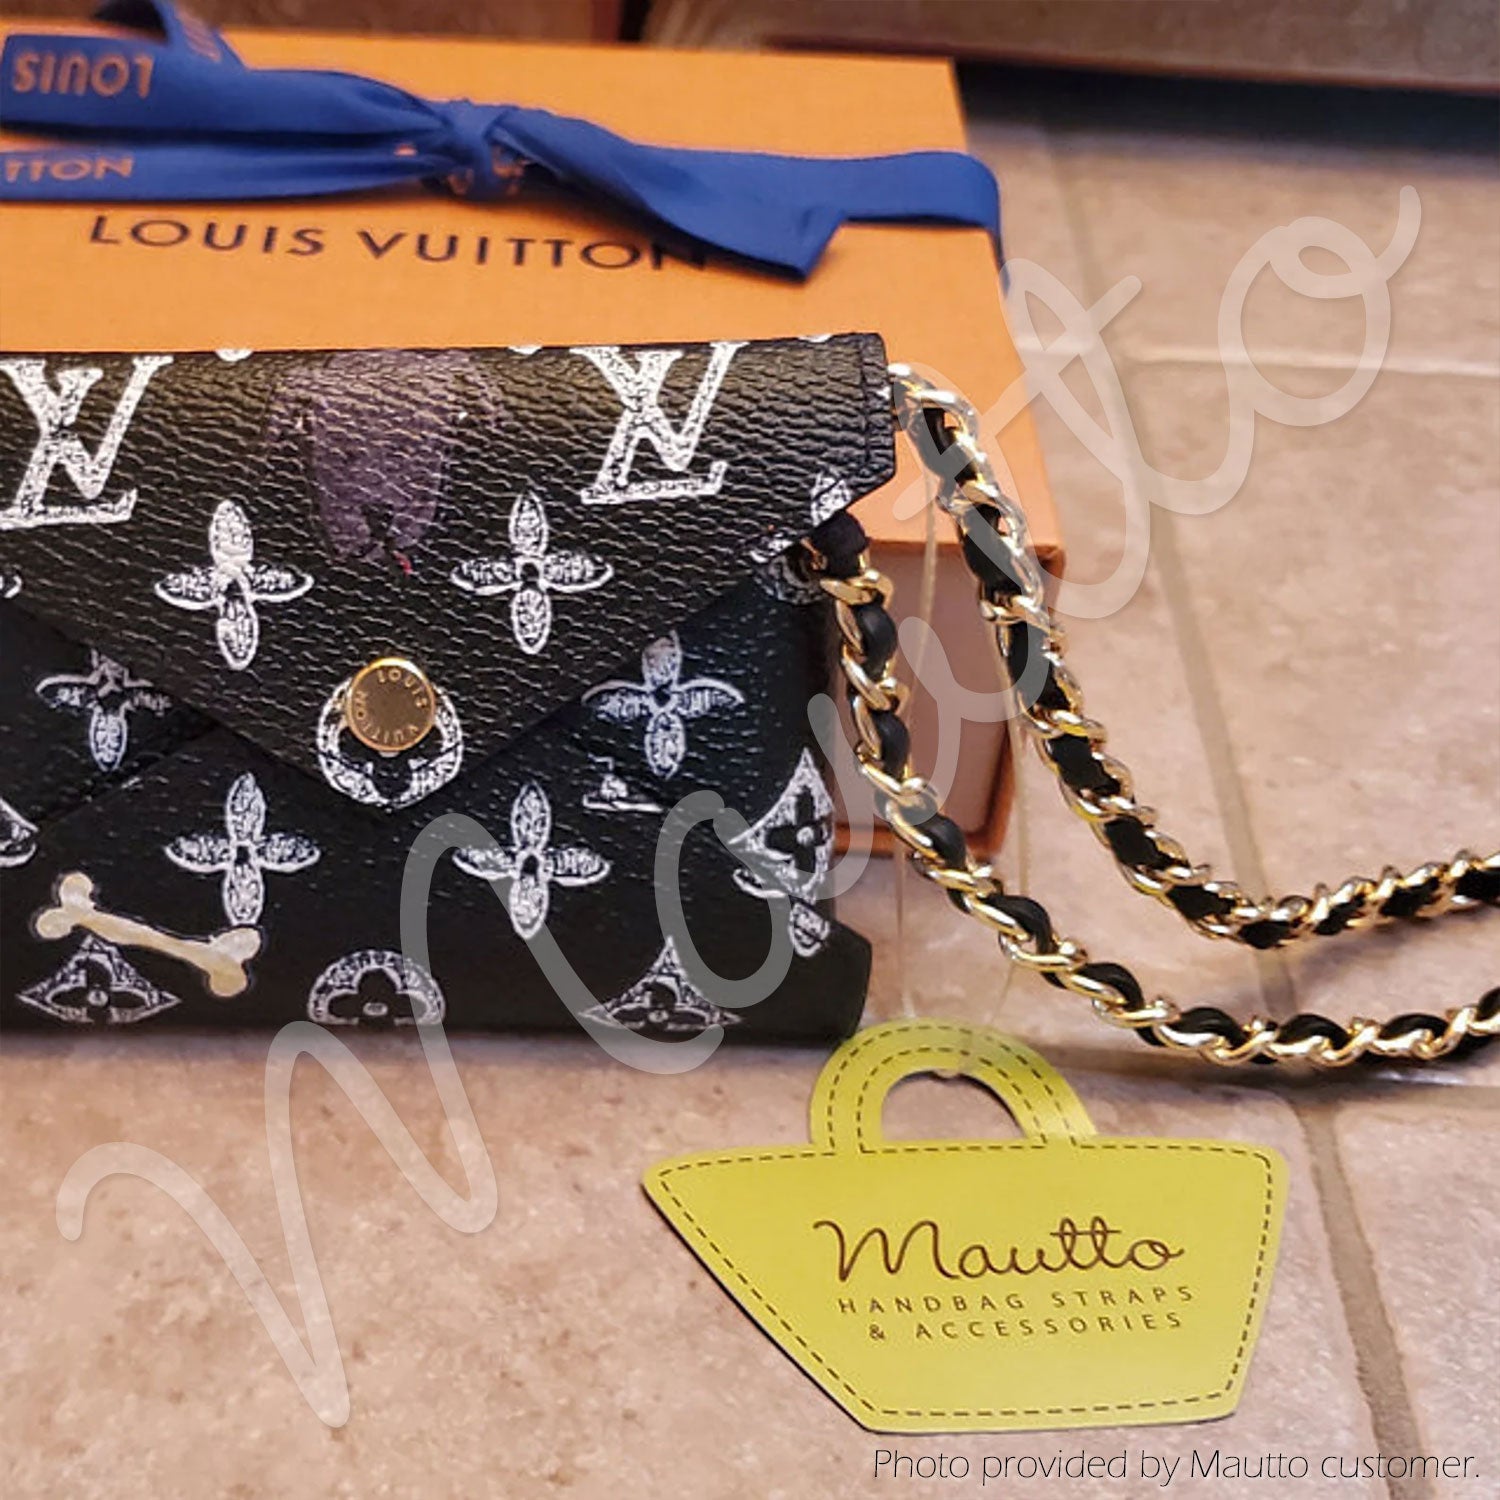 Black genuine exotic leather handbag with chain strap